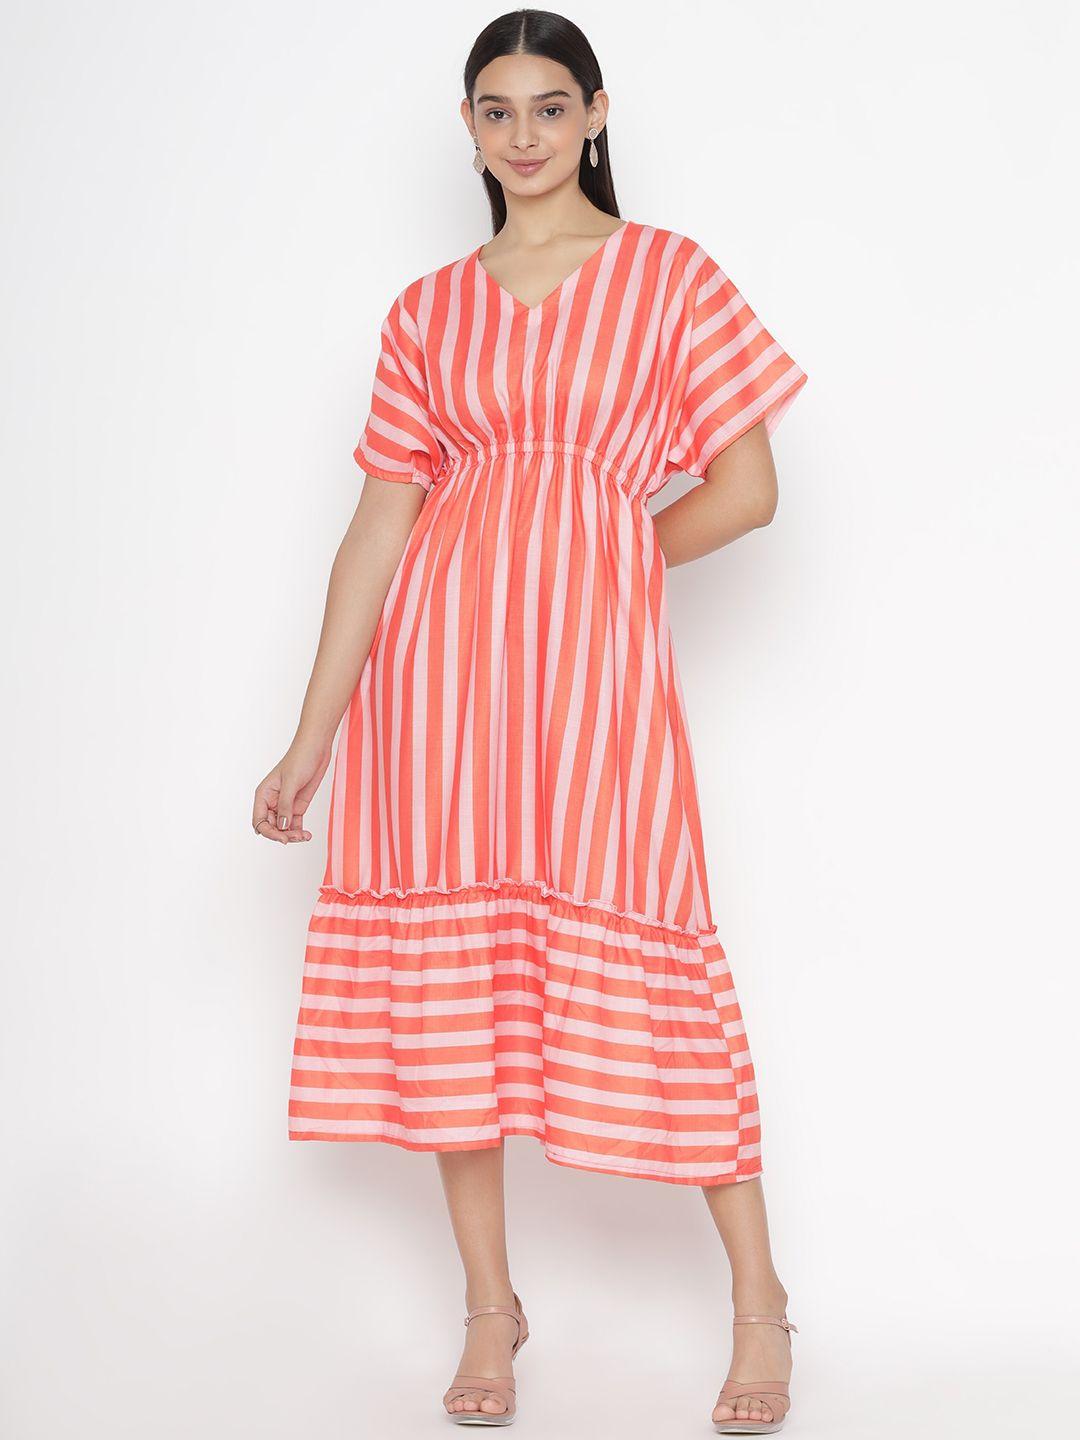 SEW YOU SOON Orange Striped Midi Dress